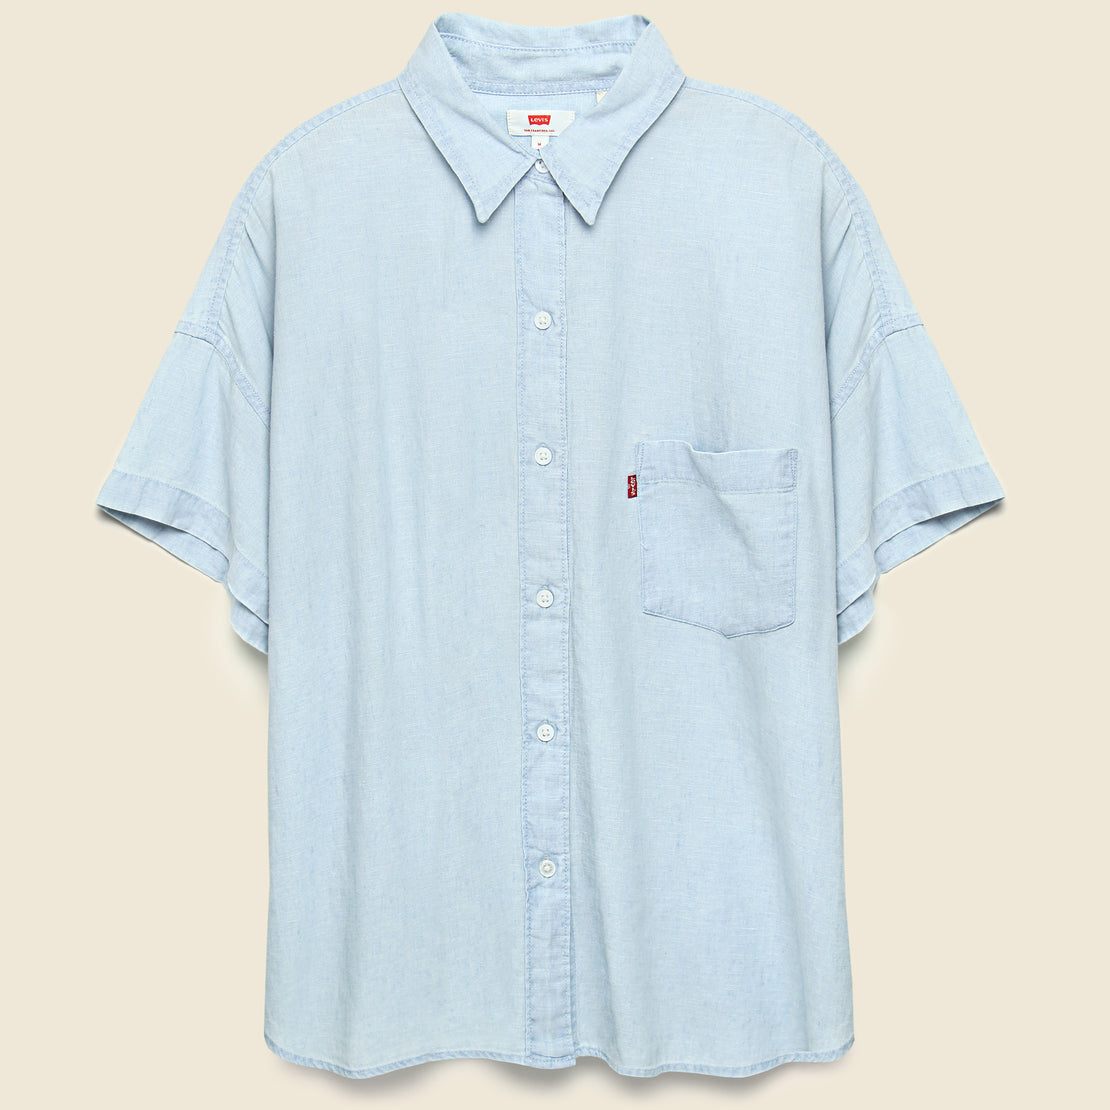 Levis Premium Alexandra Shirt - Light Mid Wash